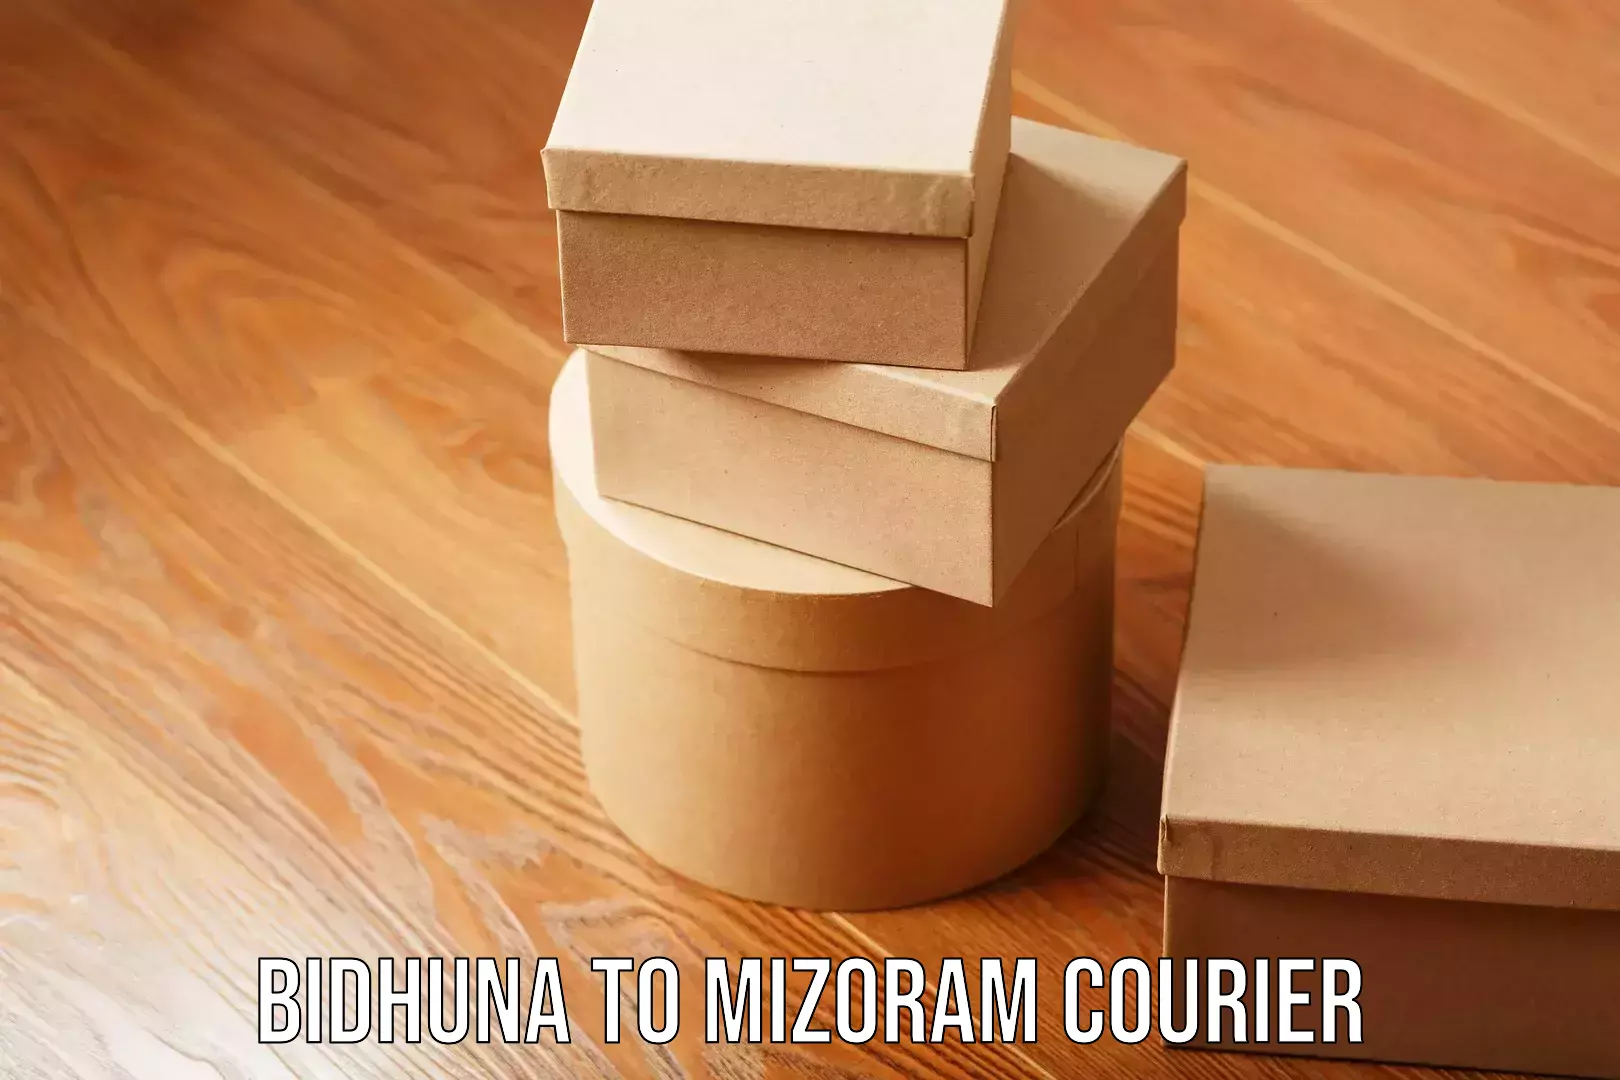 User-friendly delivery service Bidhuna to Mizoram